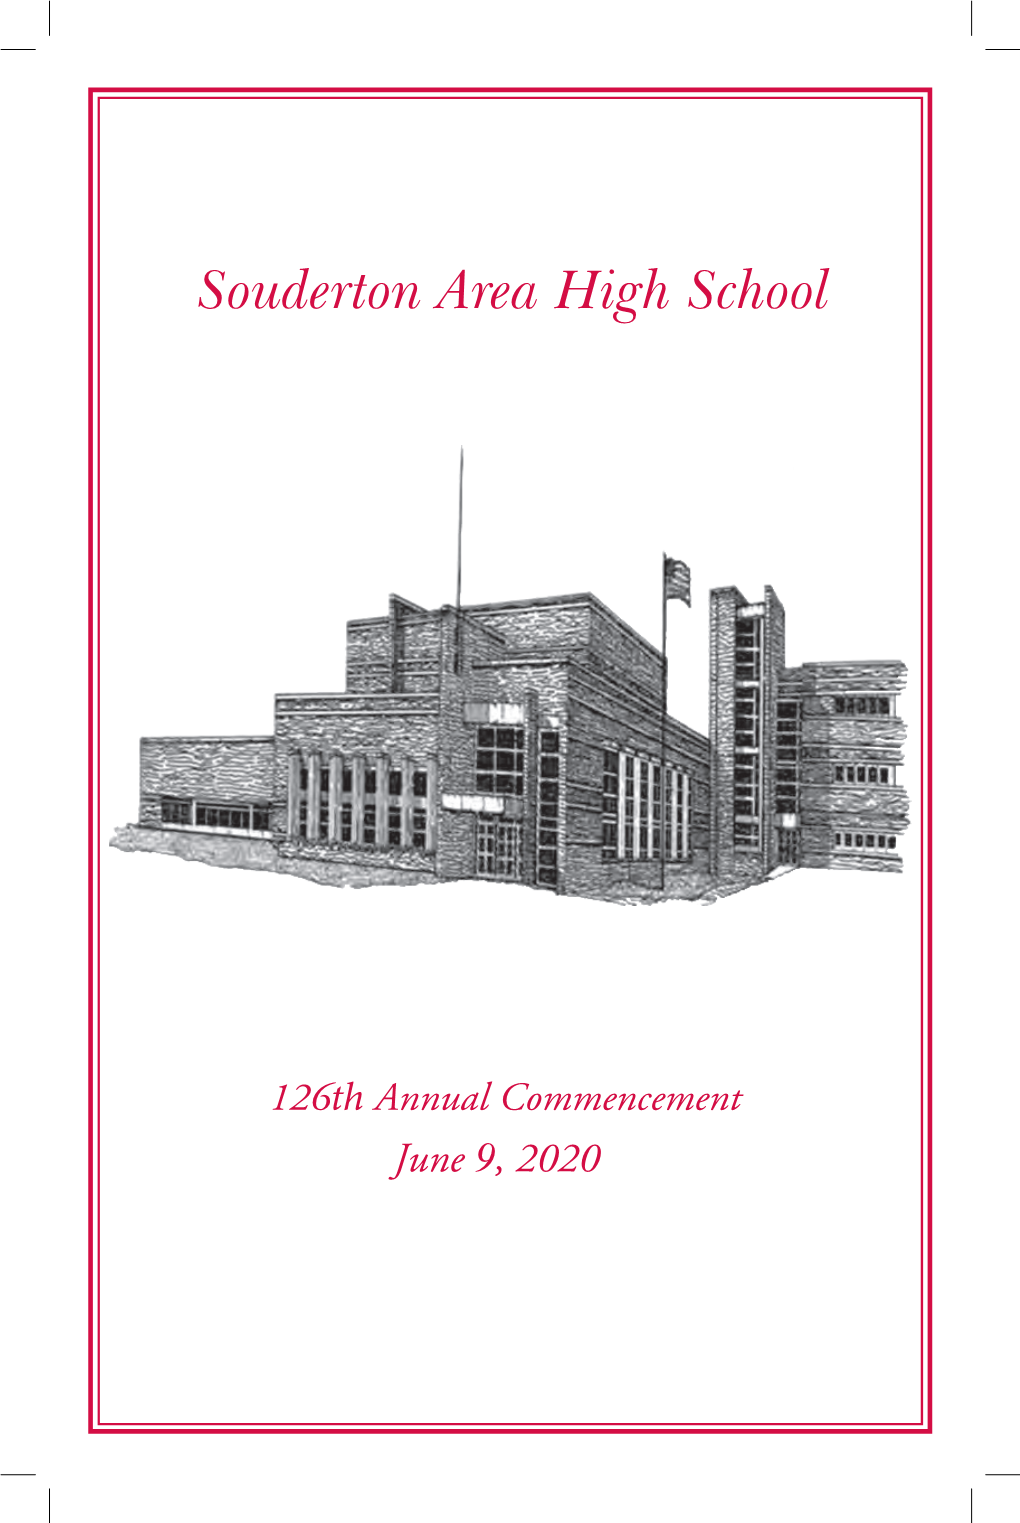 SAHS-Graduation-Program-2020.Pdf